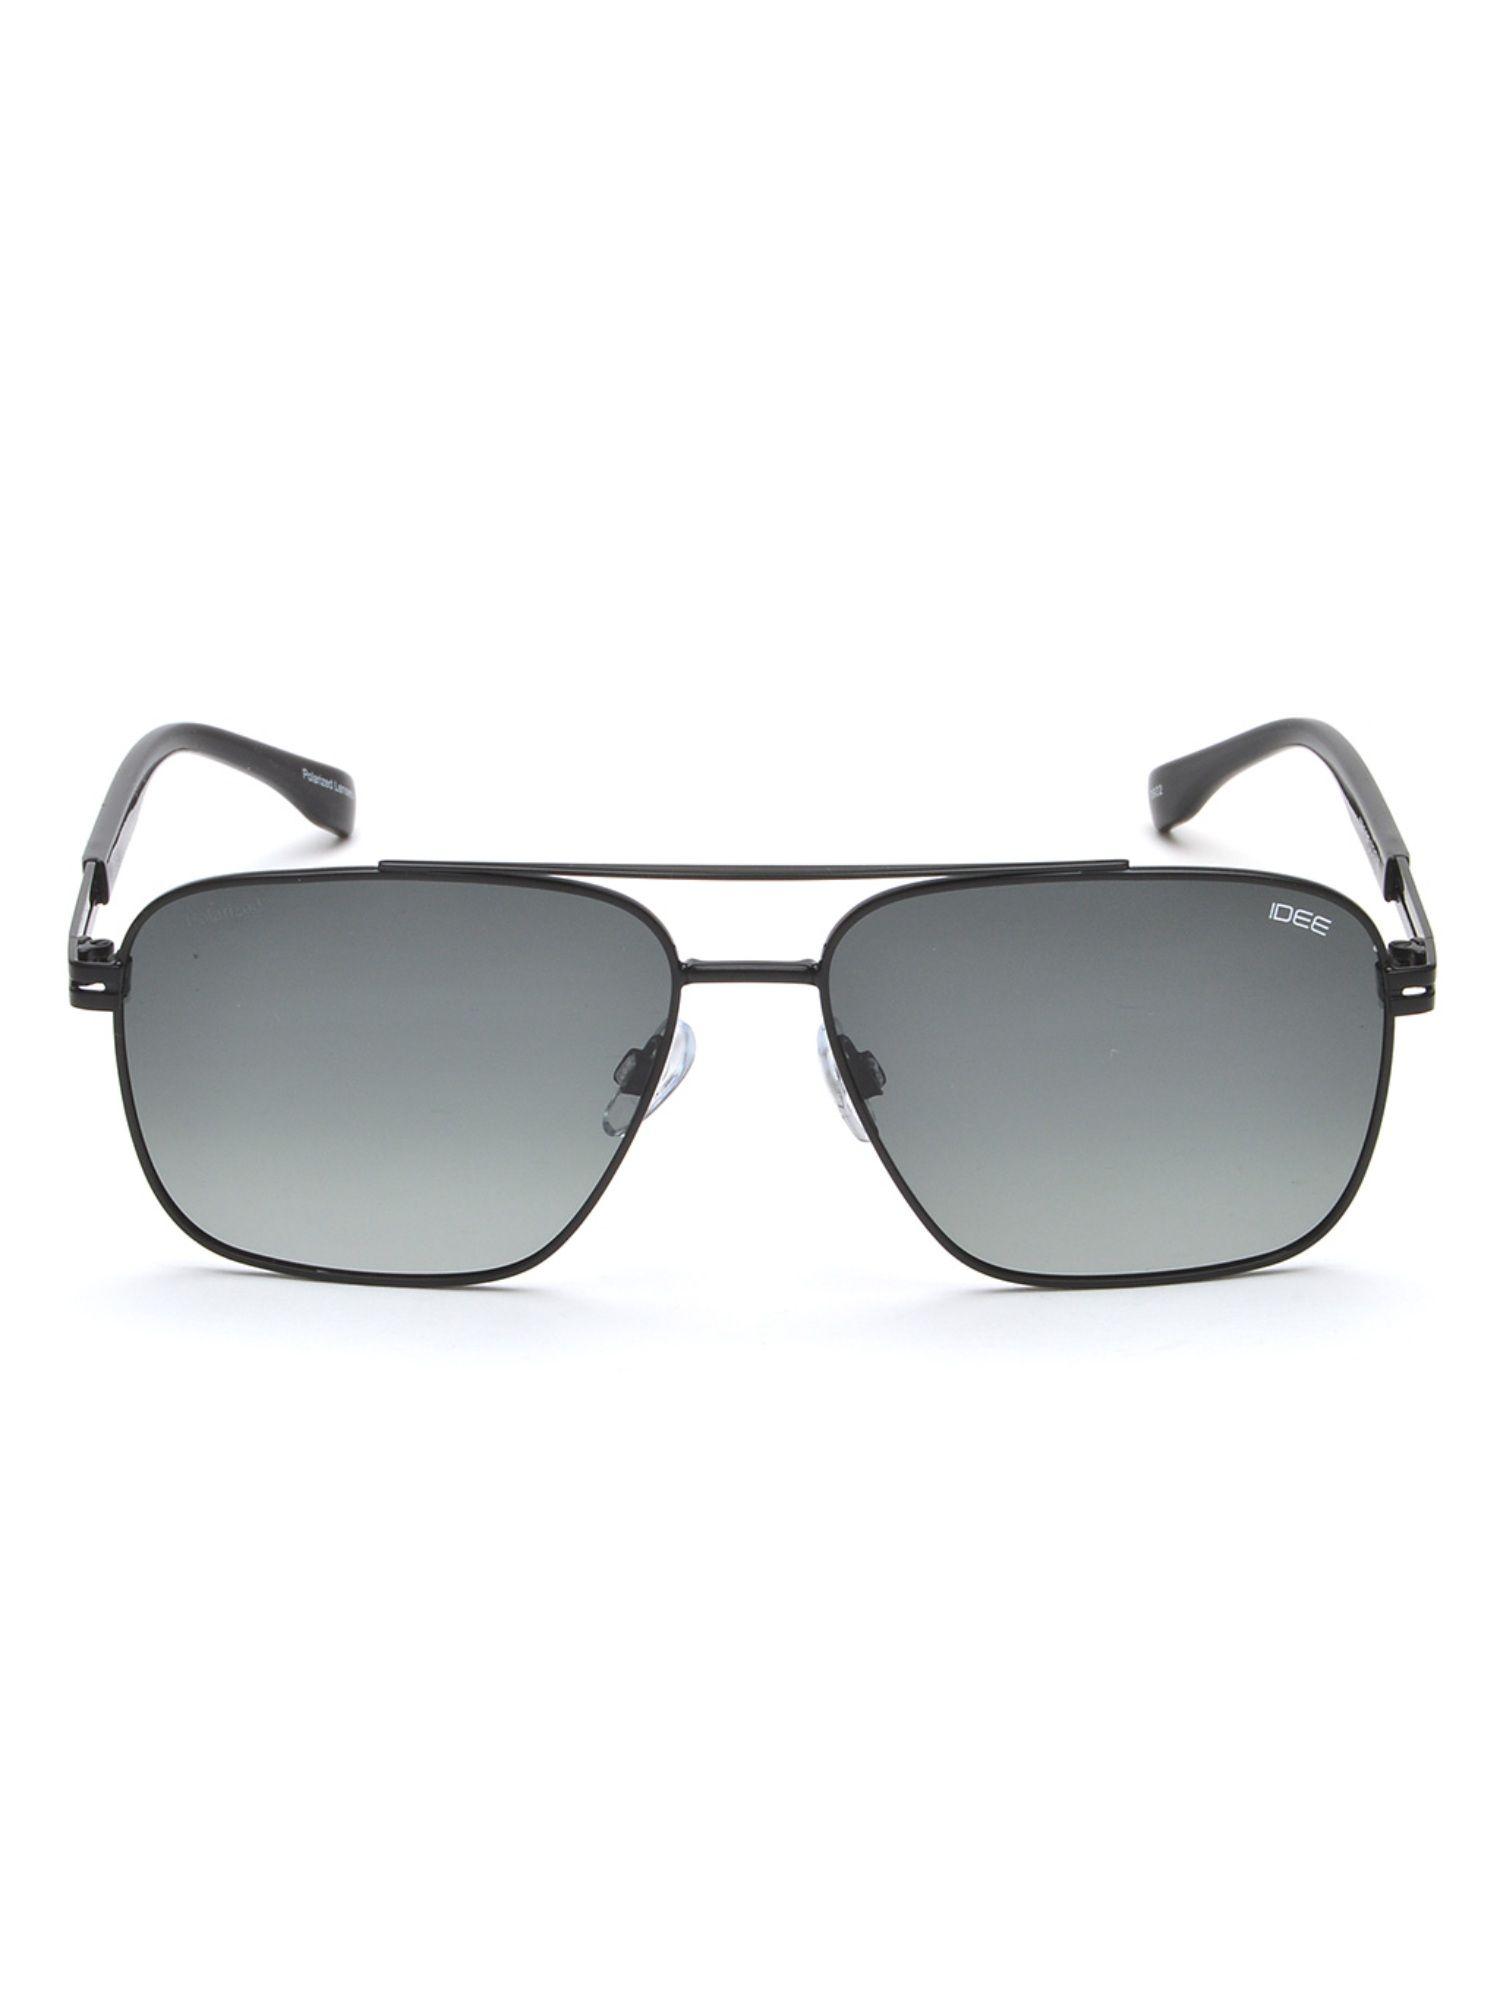 s2917 c1p 57 grey lens sunglasses for men (57)